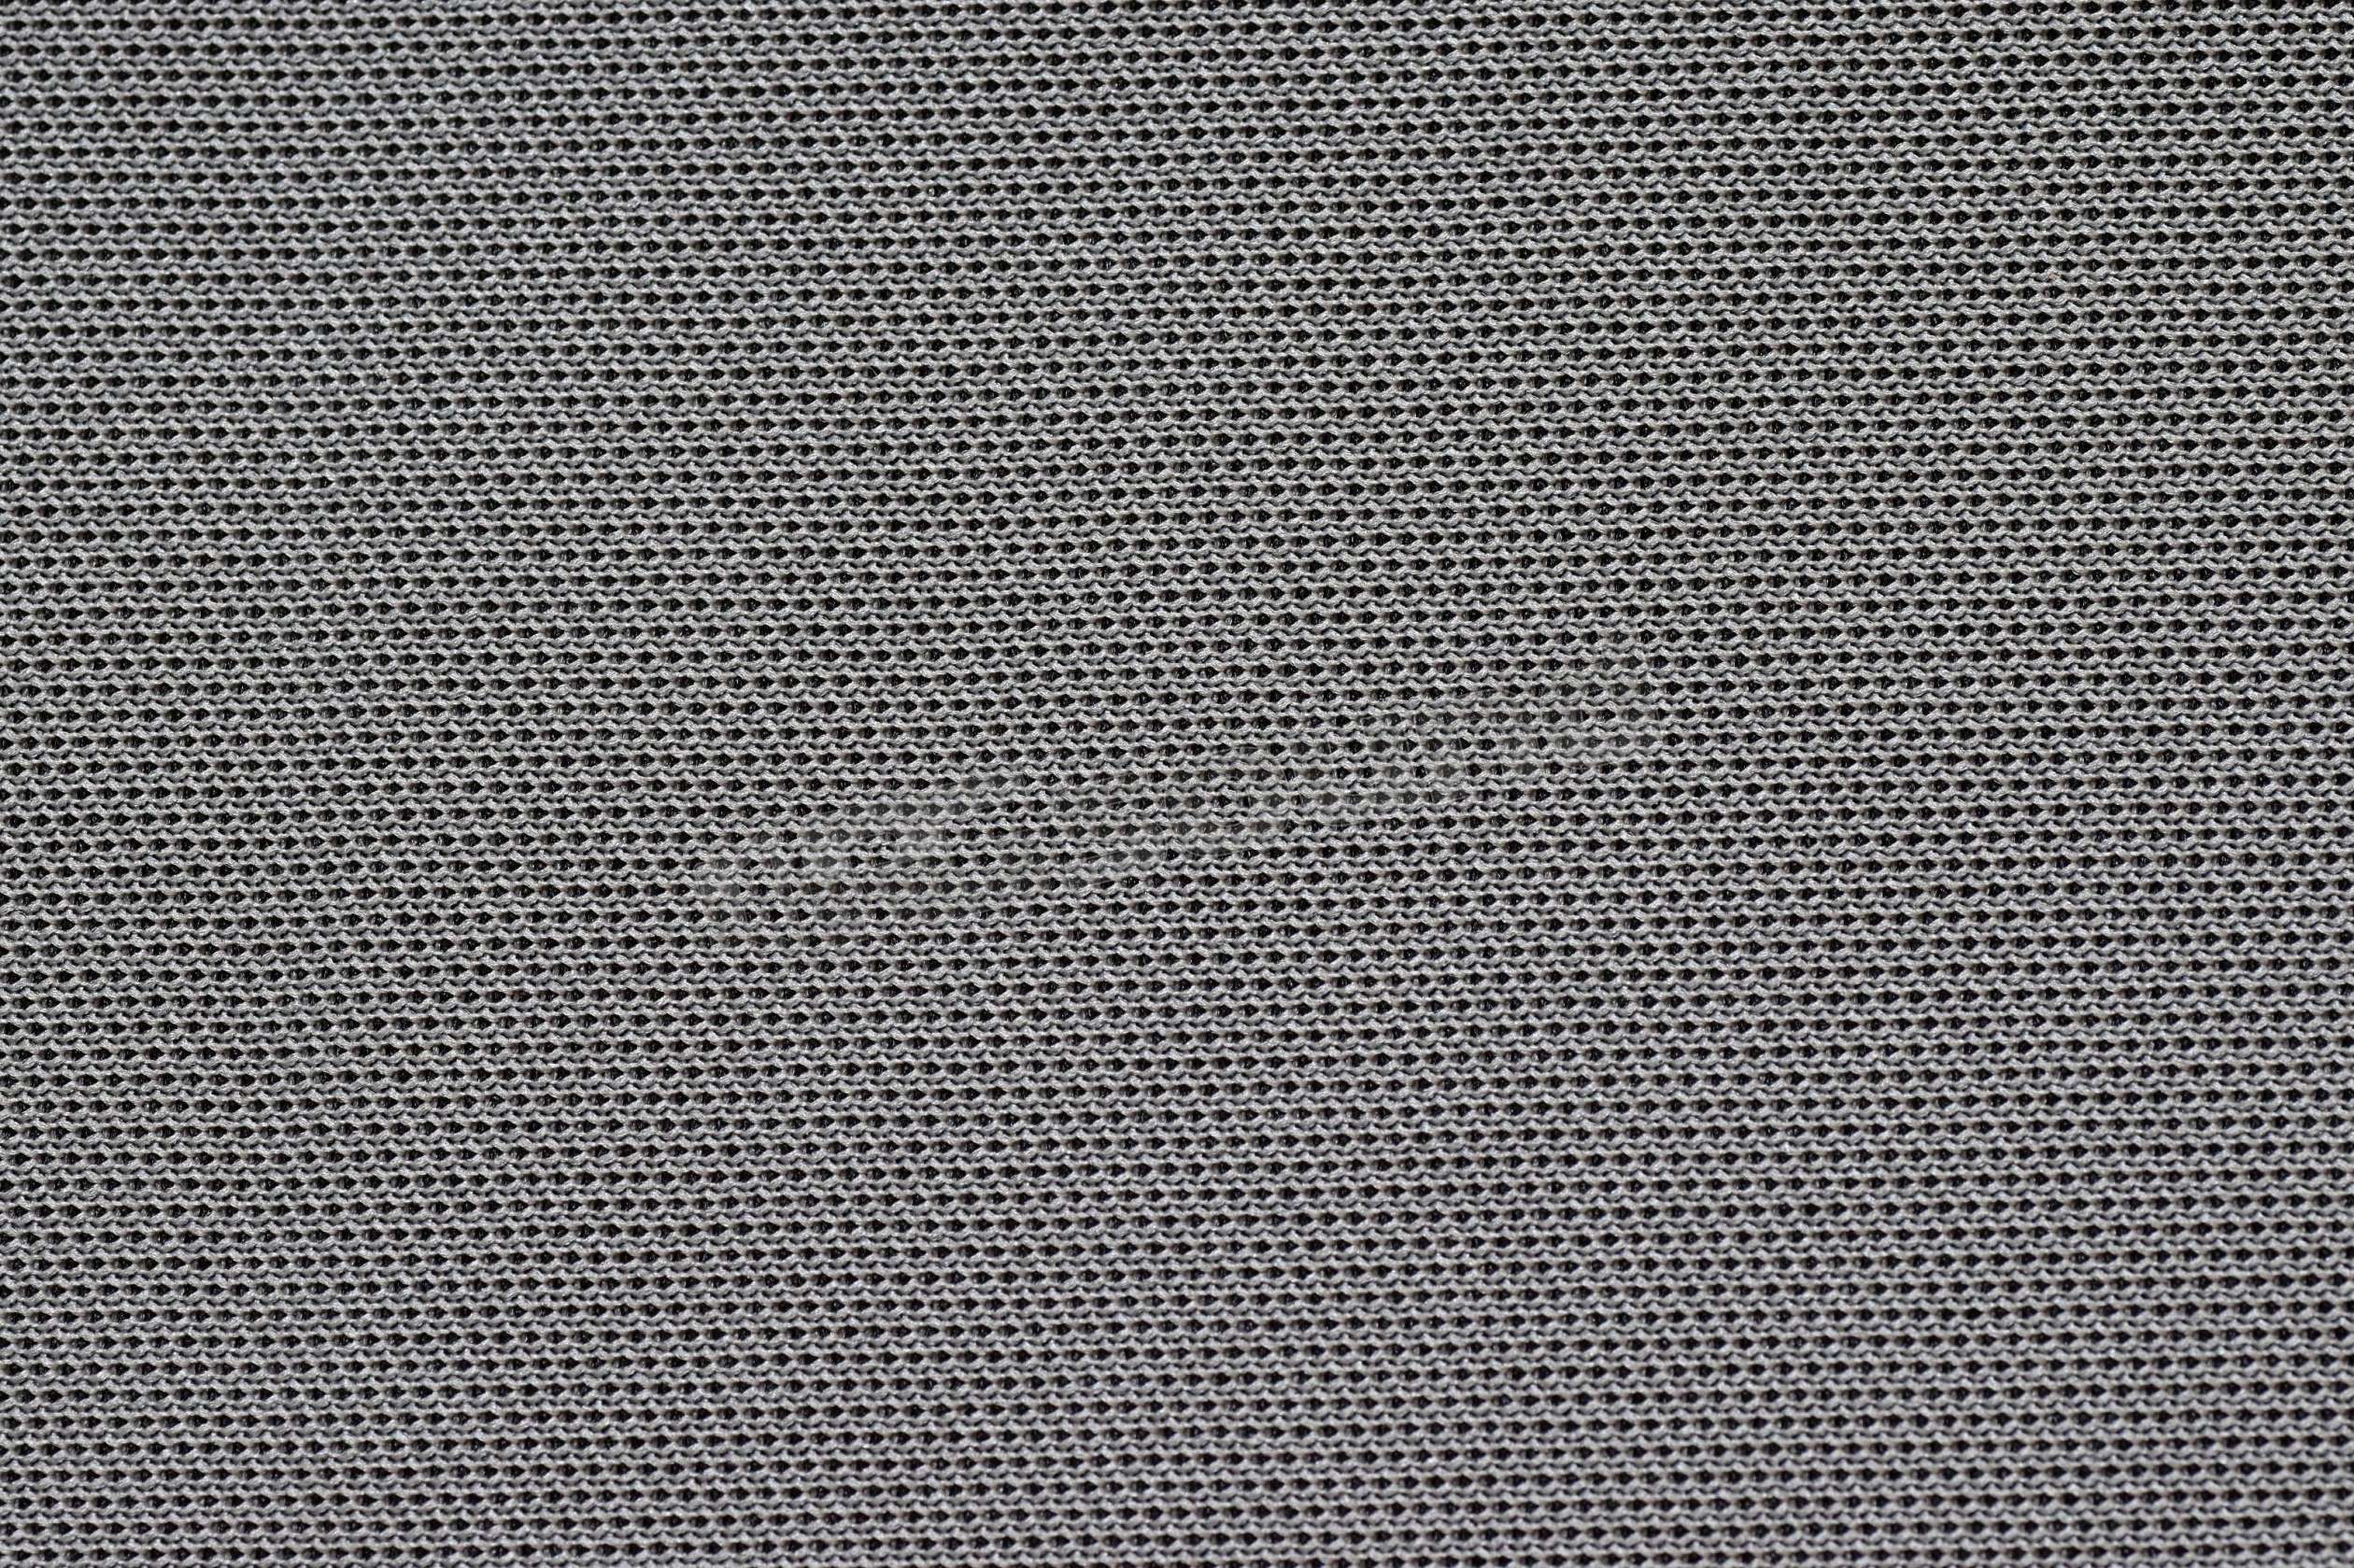 AZ AUDIOCOMP TA 25 Maglina elastica fonotrasparente Grigio 75 x 180 cm Nuova 